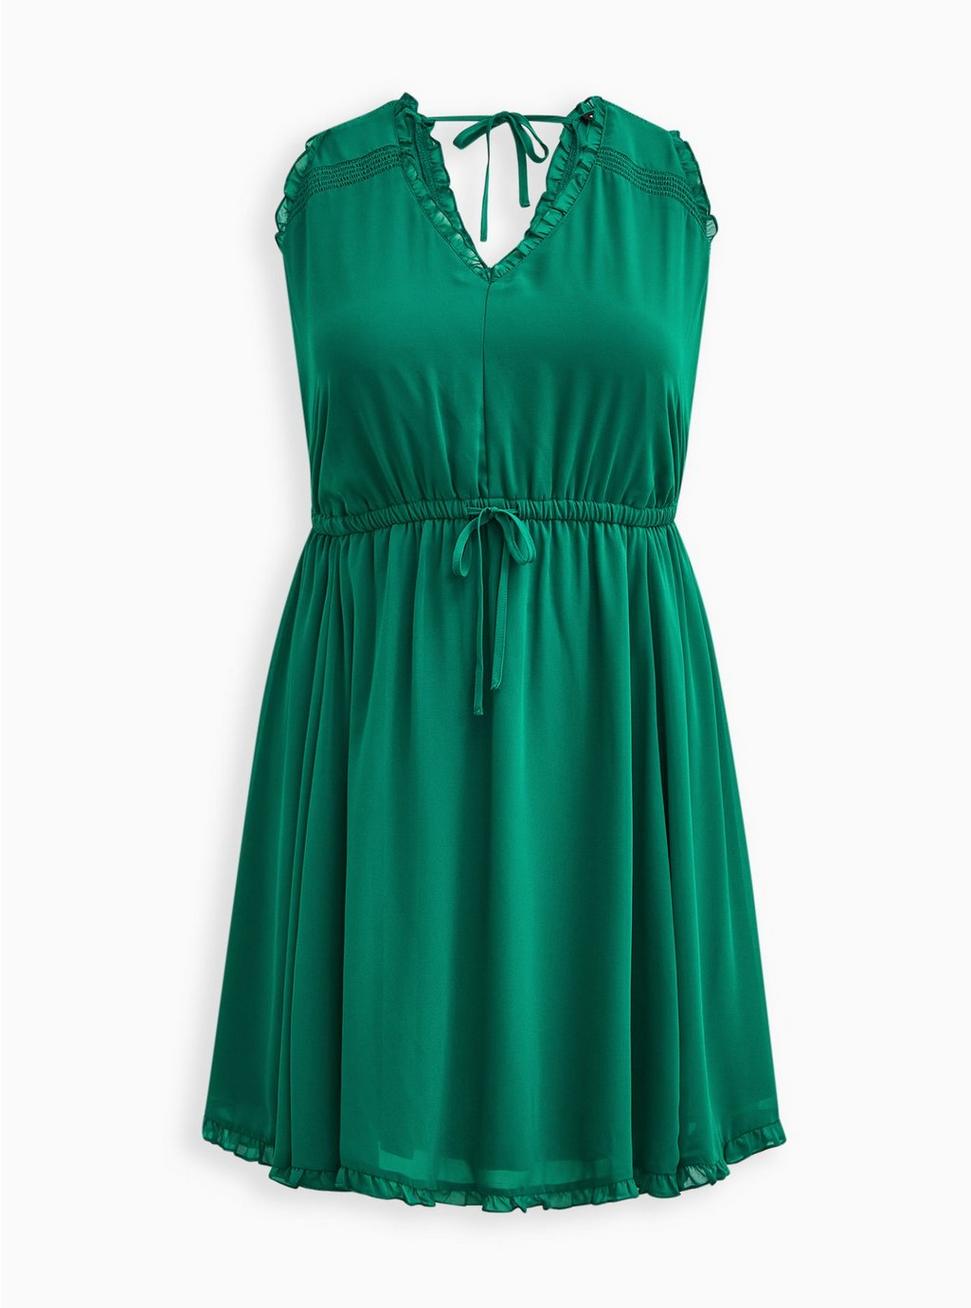 Mini Chiffon Ruffle Dress, GREEN, hi-res